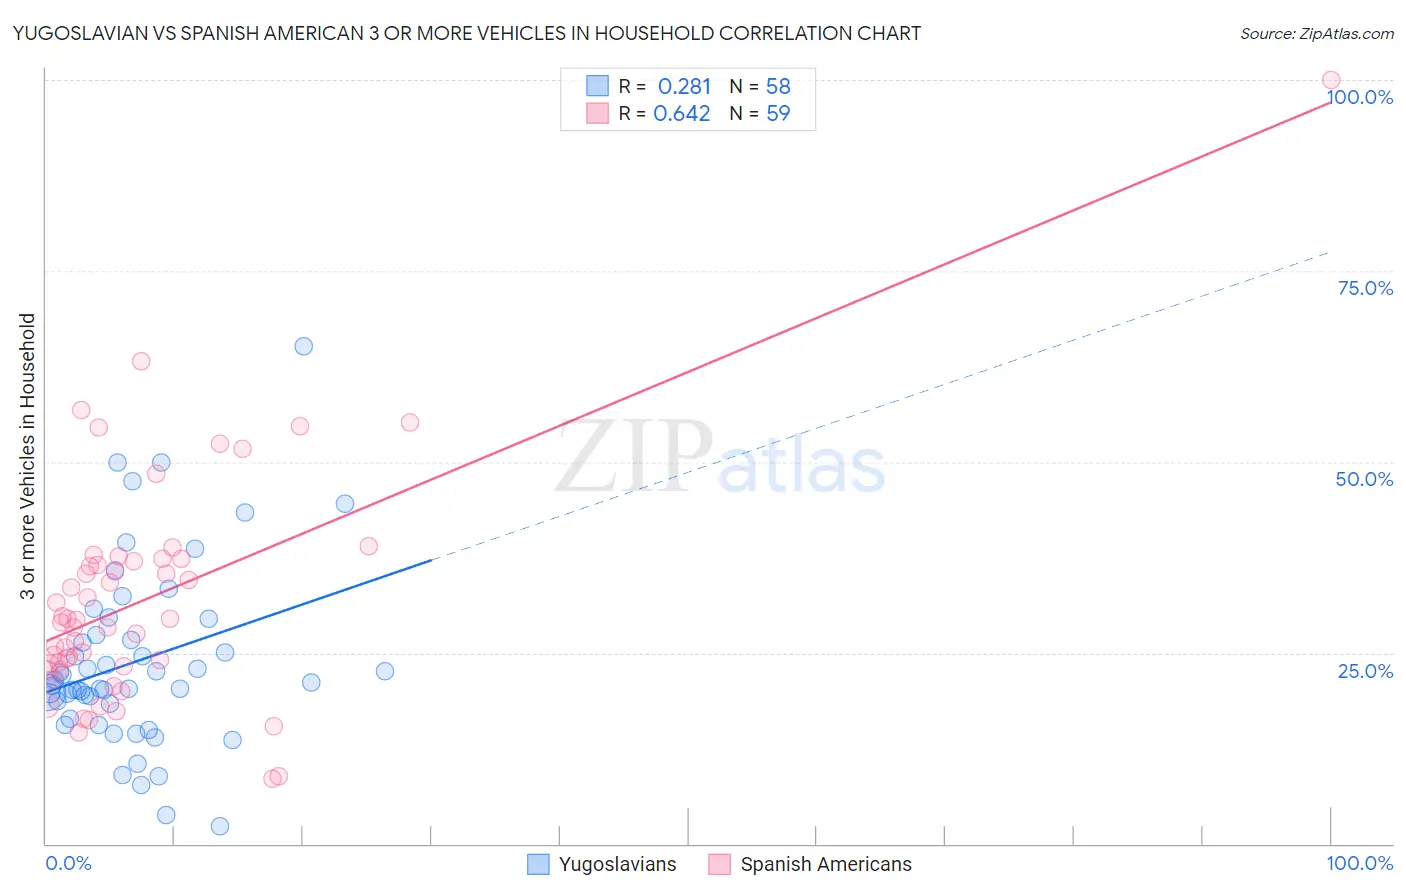 Yugoslavian vs Spanish American 3 or more Vehicles in Household